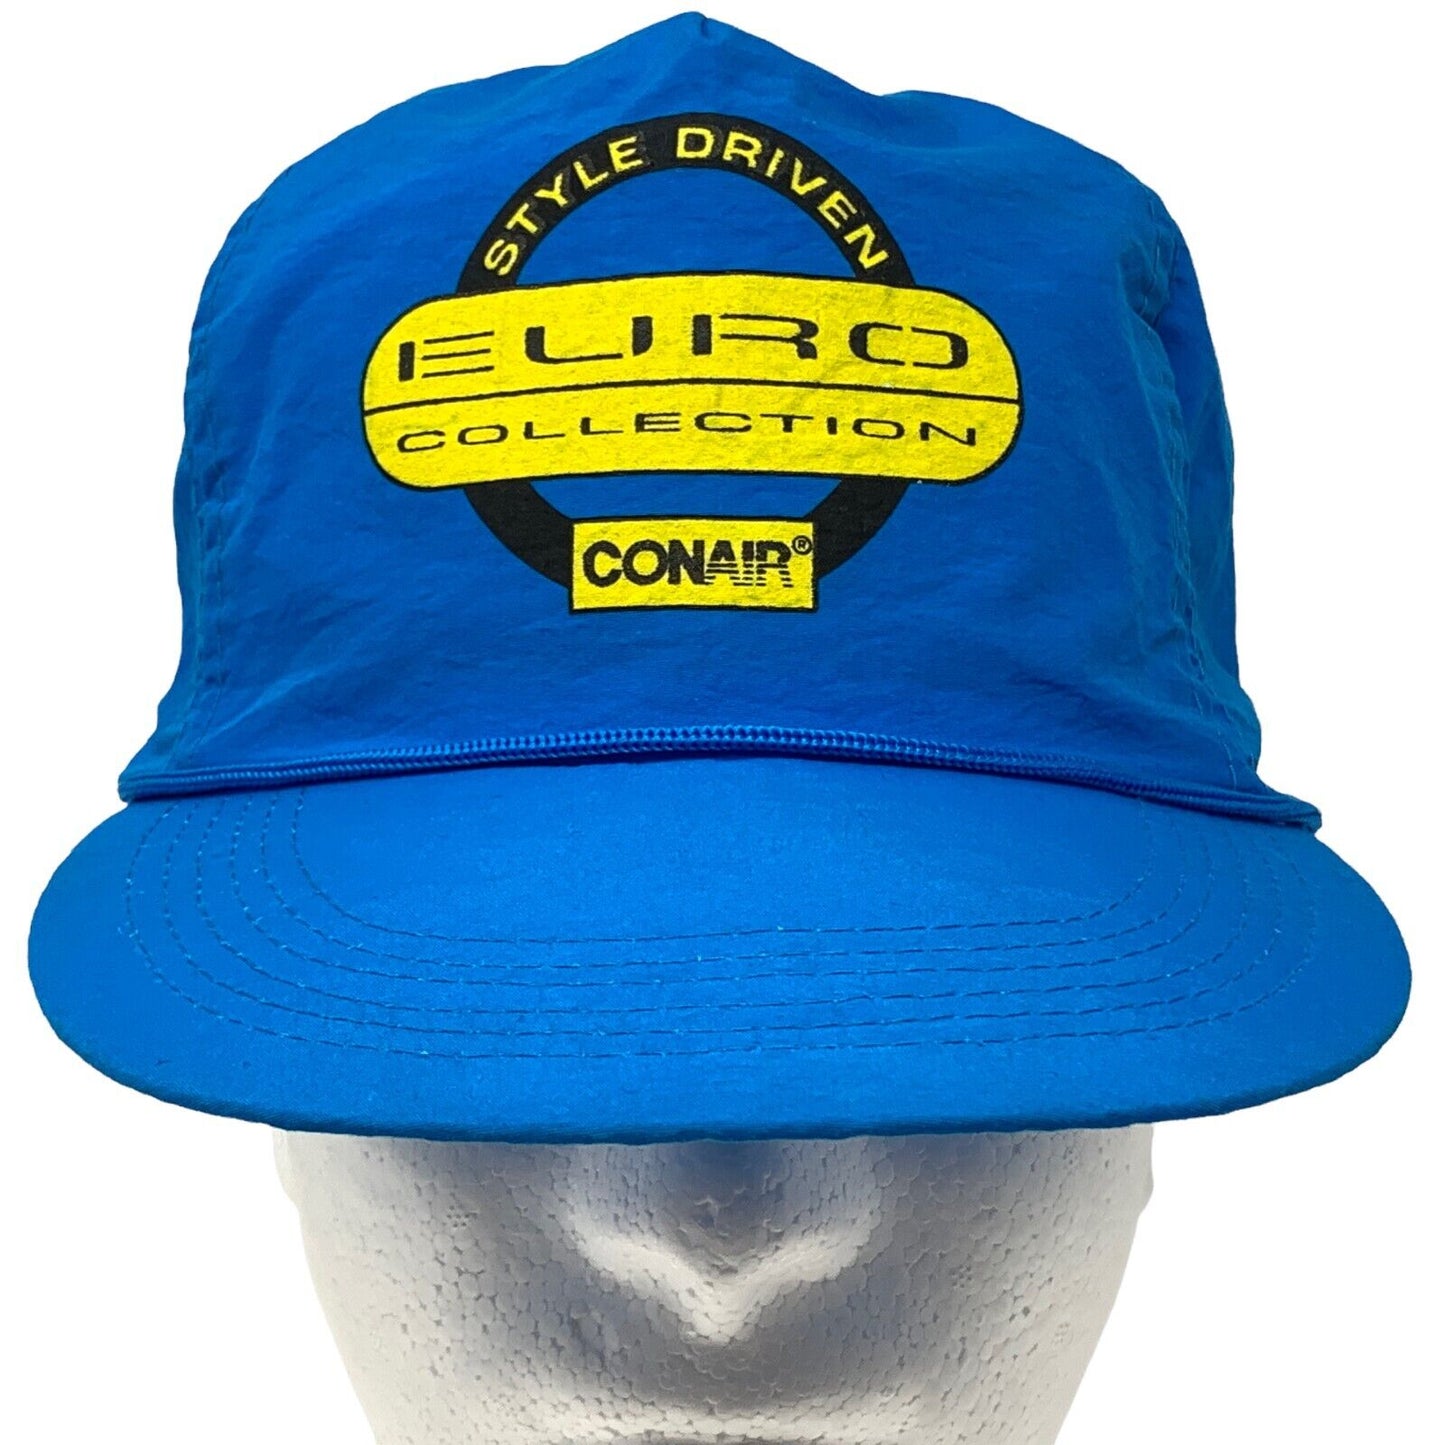 Conair Euro Collection Hair Dryer Hat Vintage 90s Blue 5 Five Panel Baseball Cap